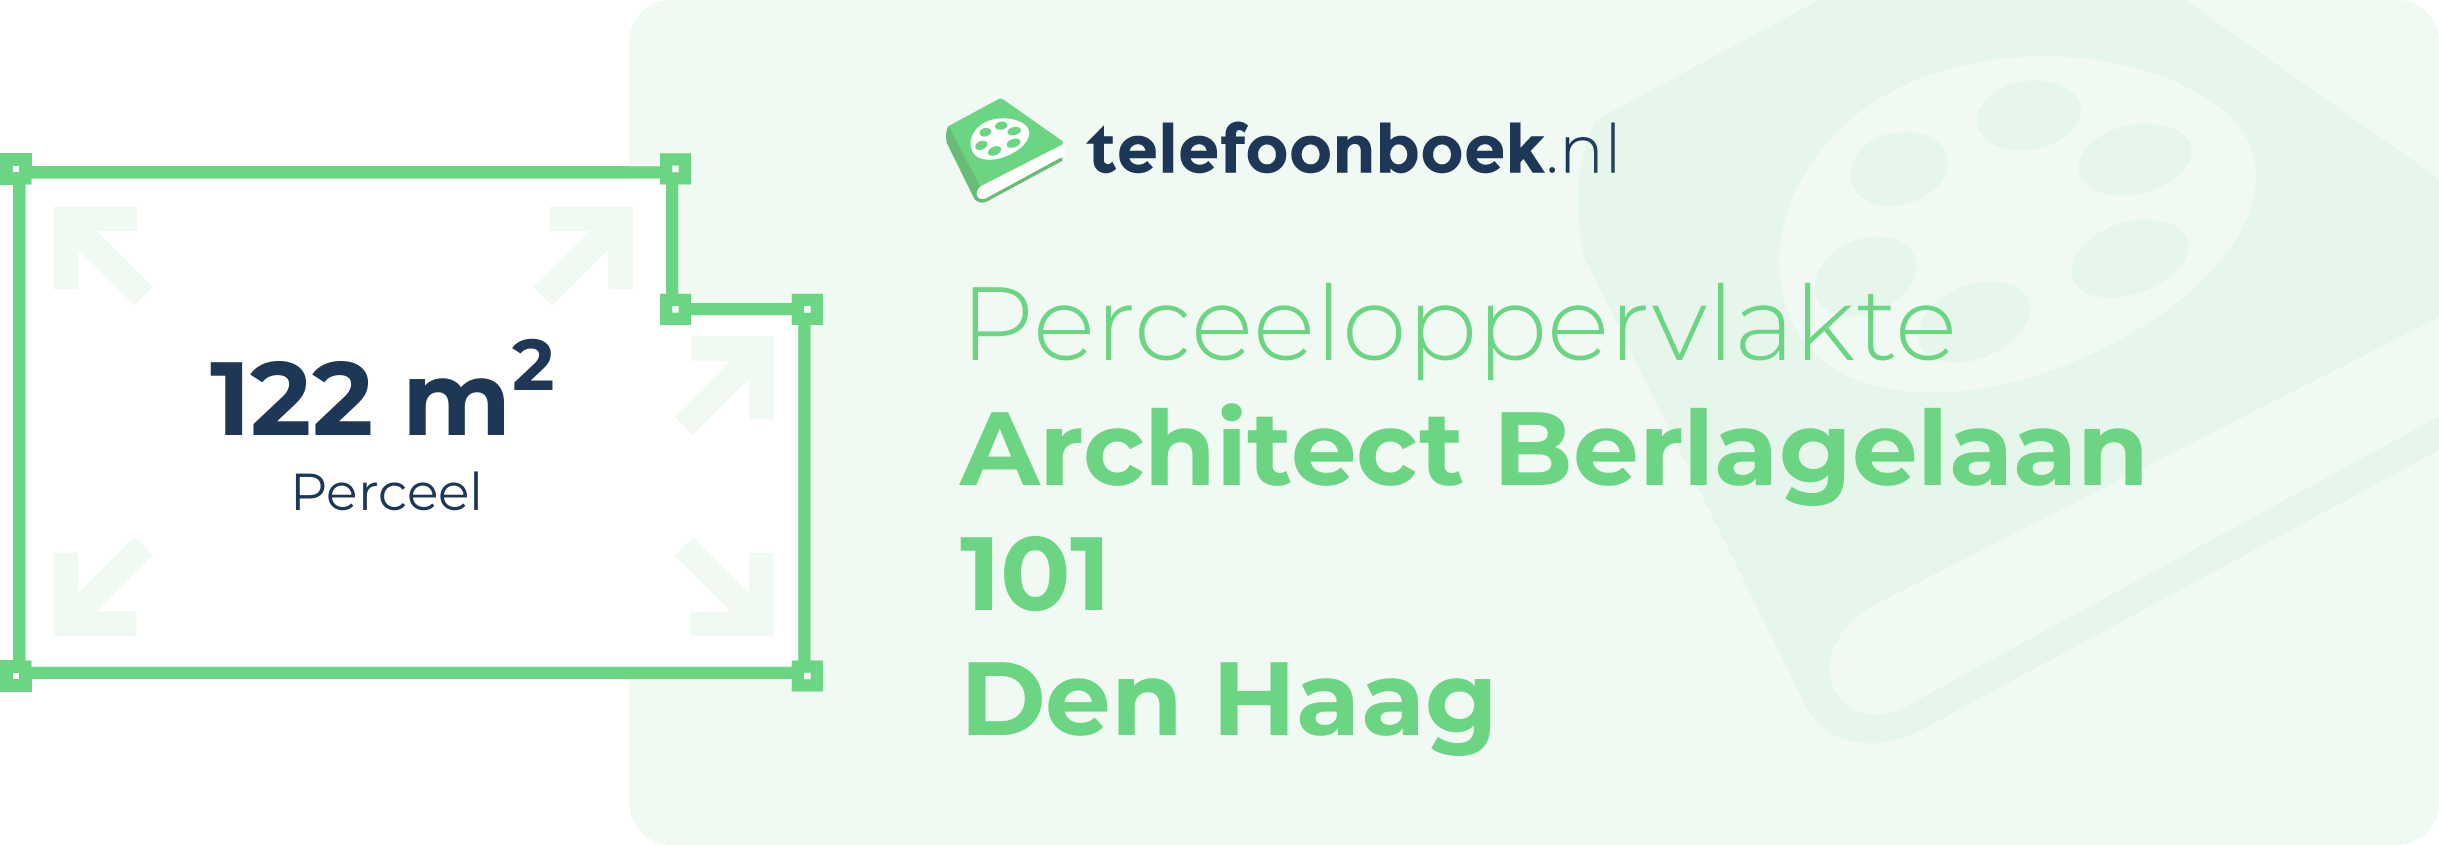 Perceeloppervlakte Architect Berlagelaan 101 Den Haag